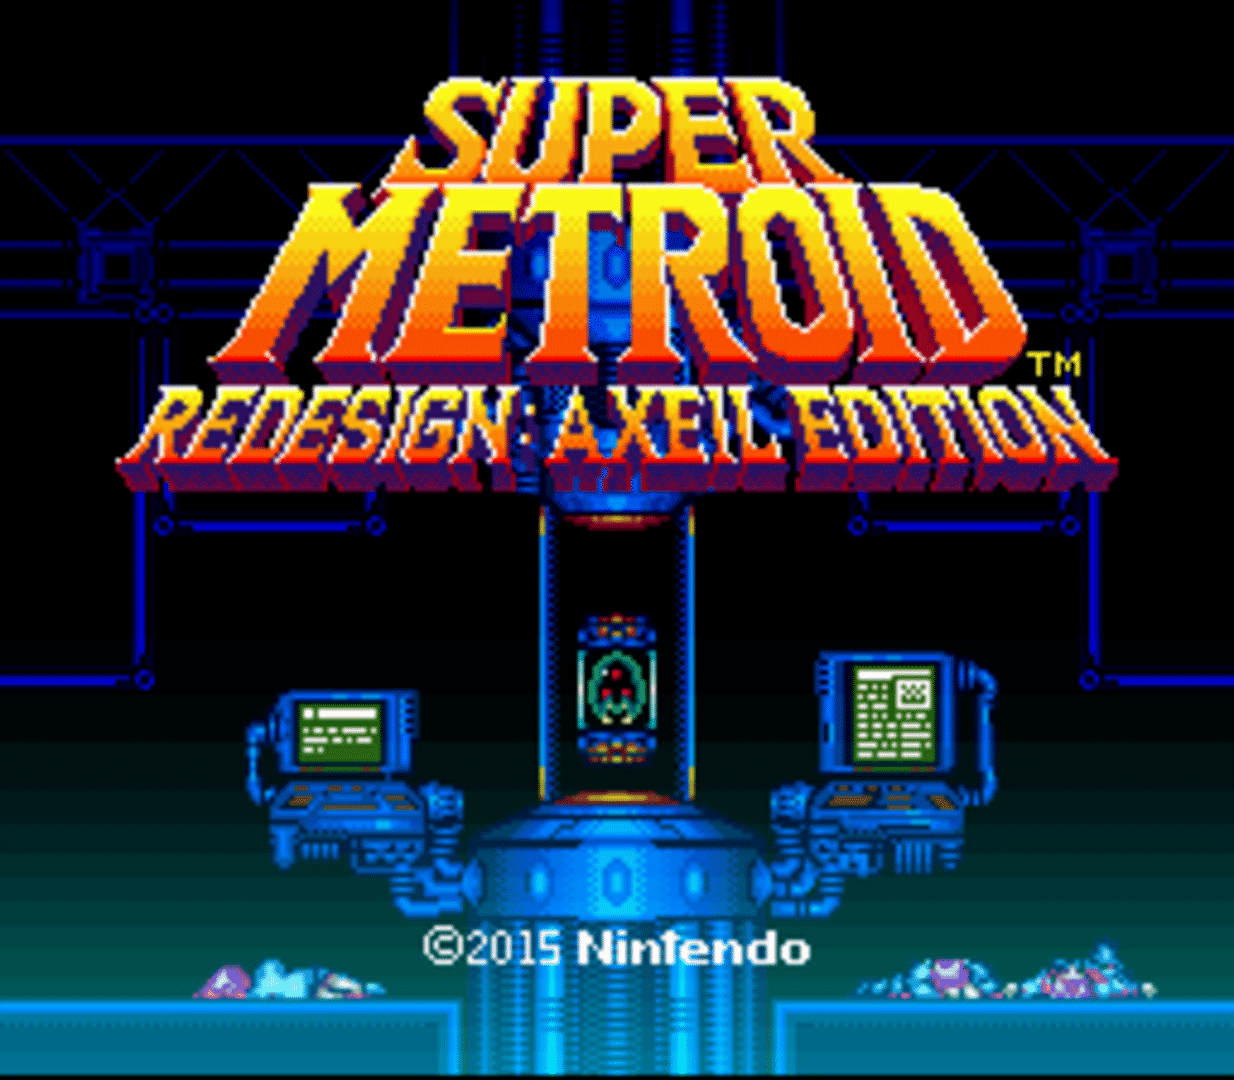 super metroid redesign axeil edition help